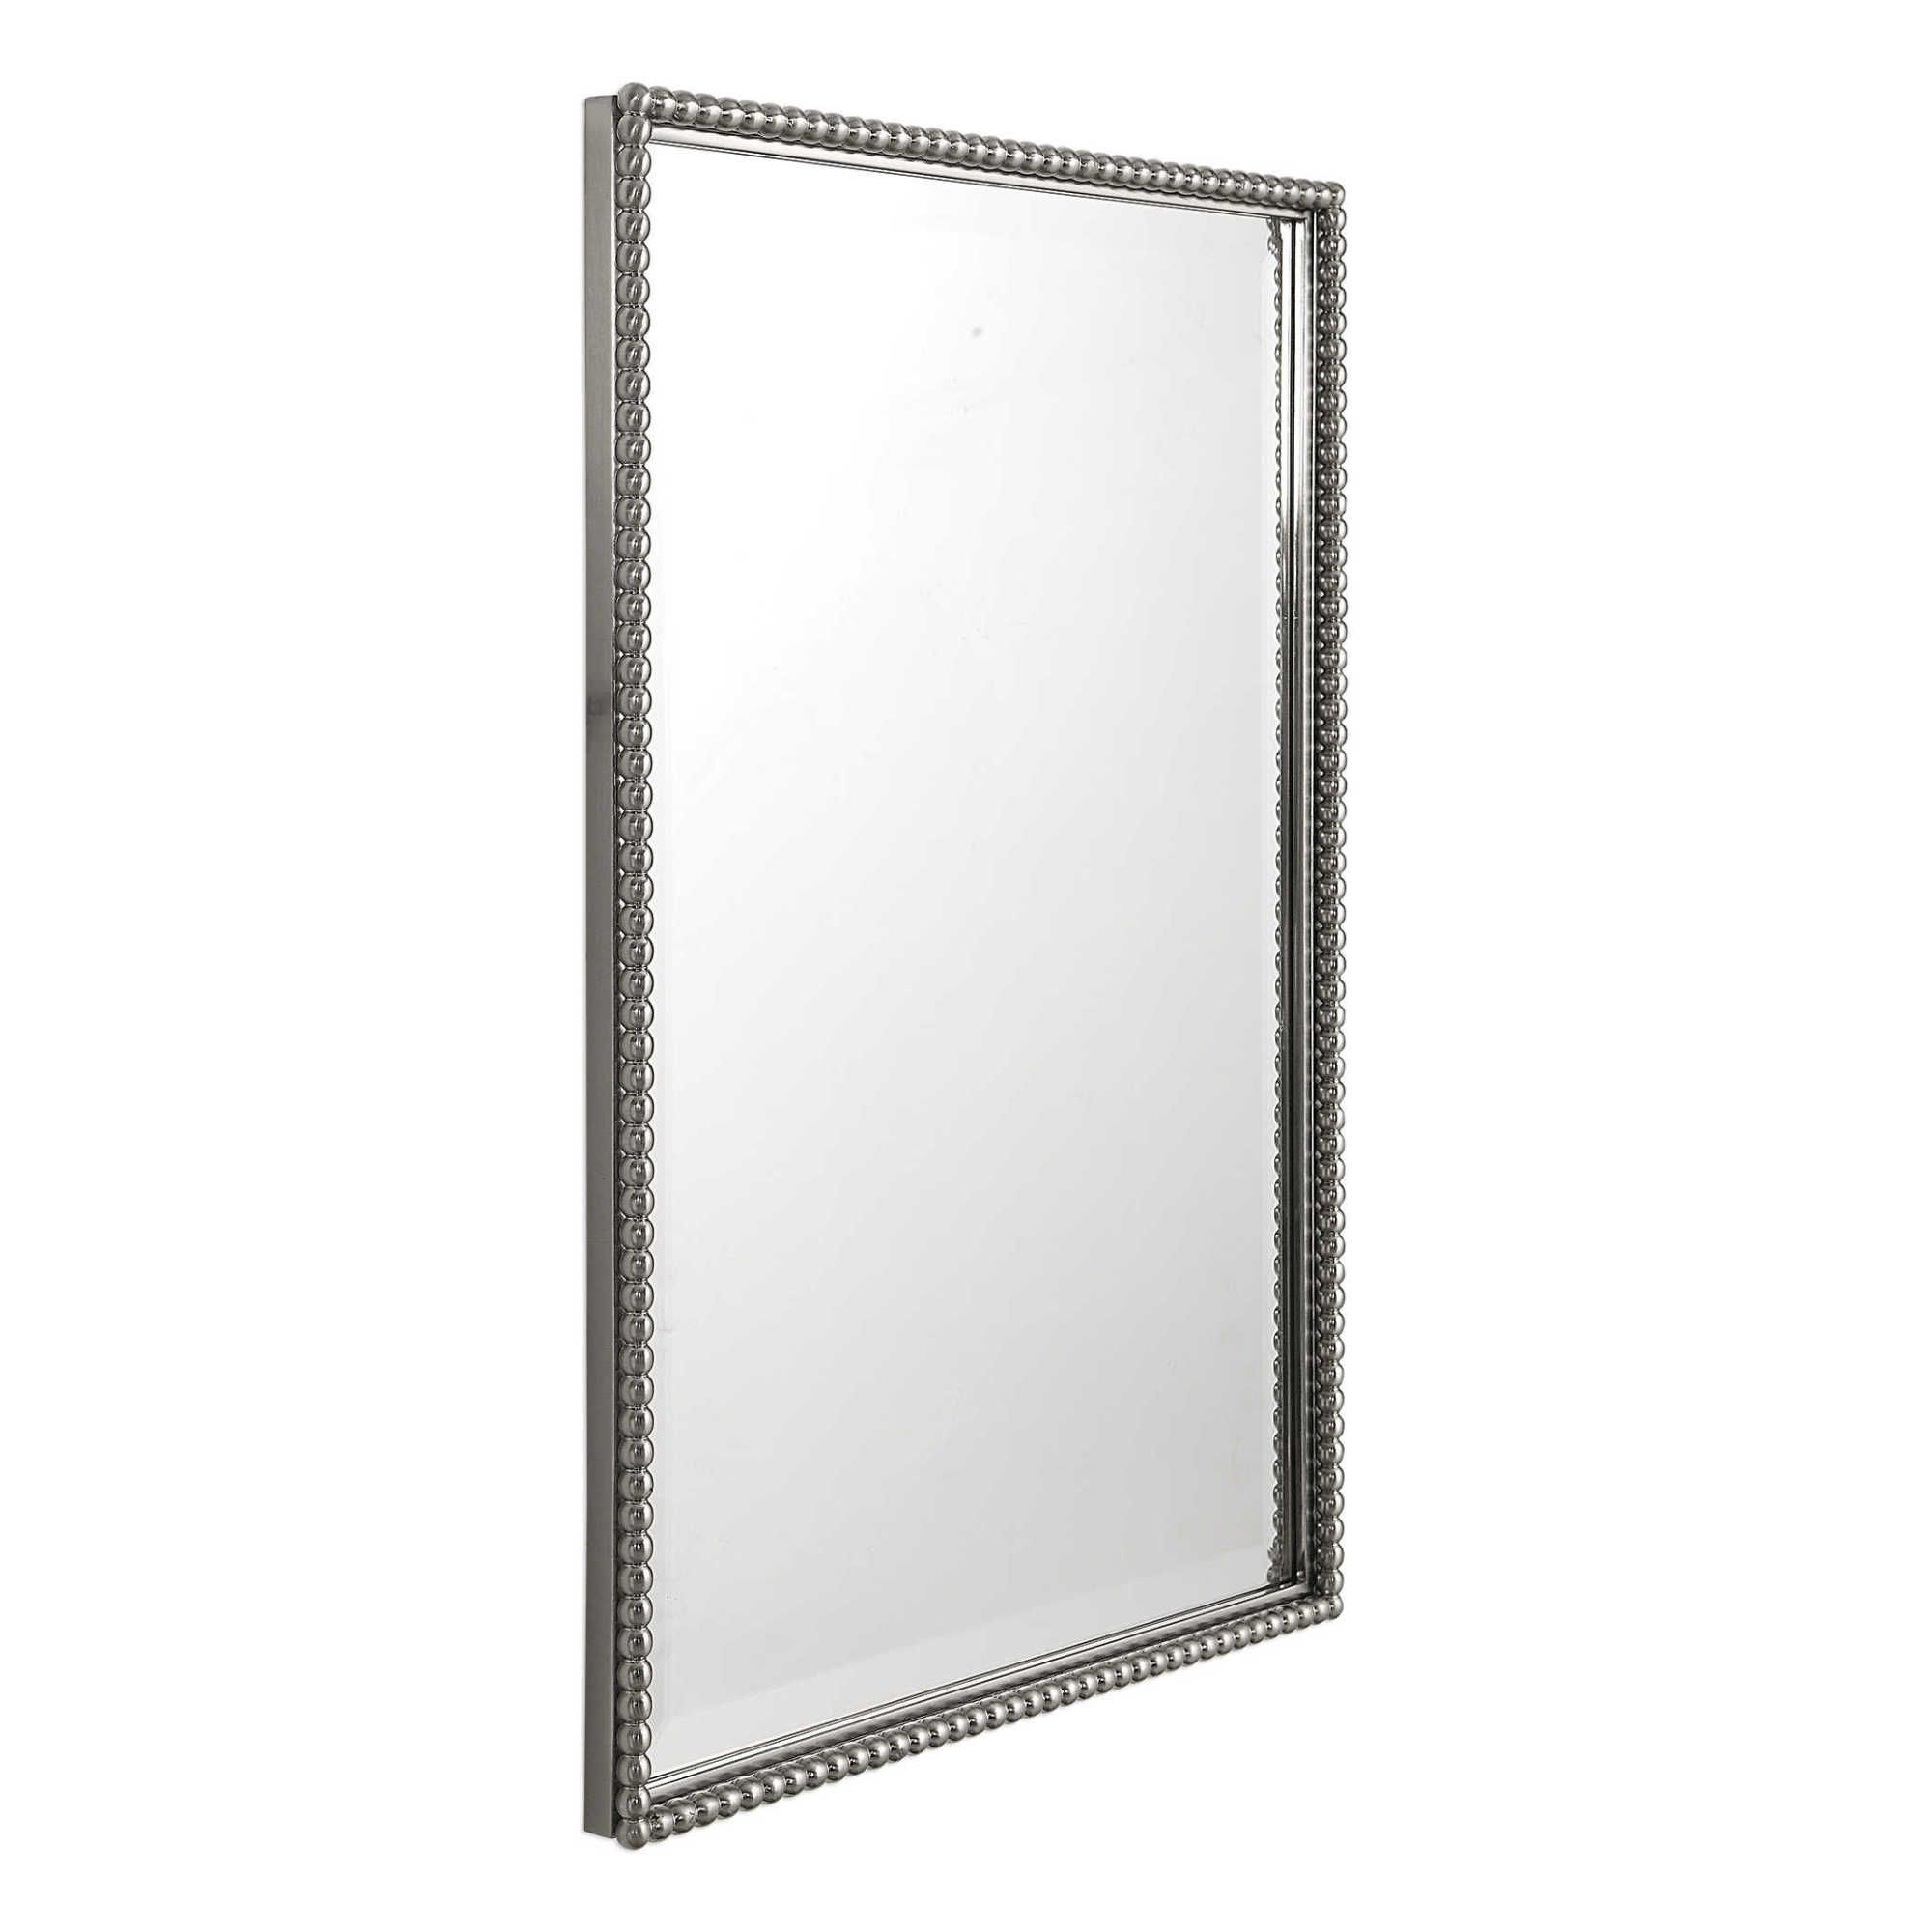 Uttermost 01113 Nickel Sherise Rectangle Rectangular Mirror | Ebay Pertaining To Brushed Nickel Rectangular Wall Mirrors (View 9 of 15)